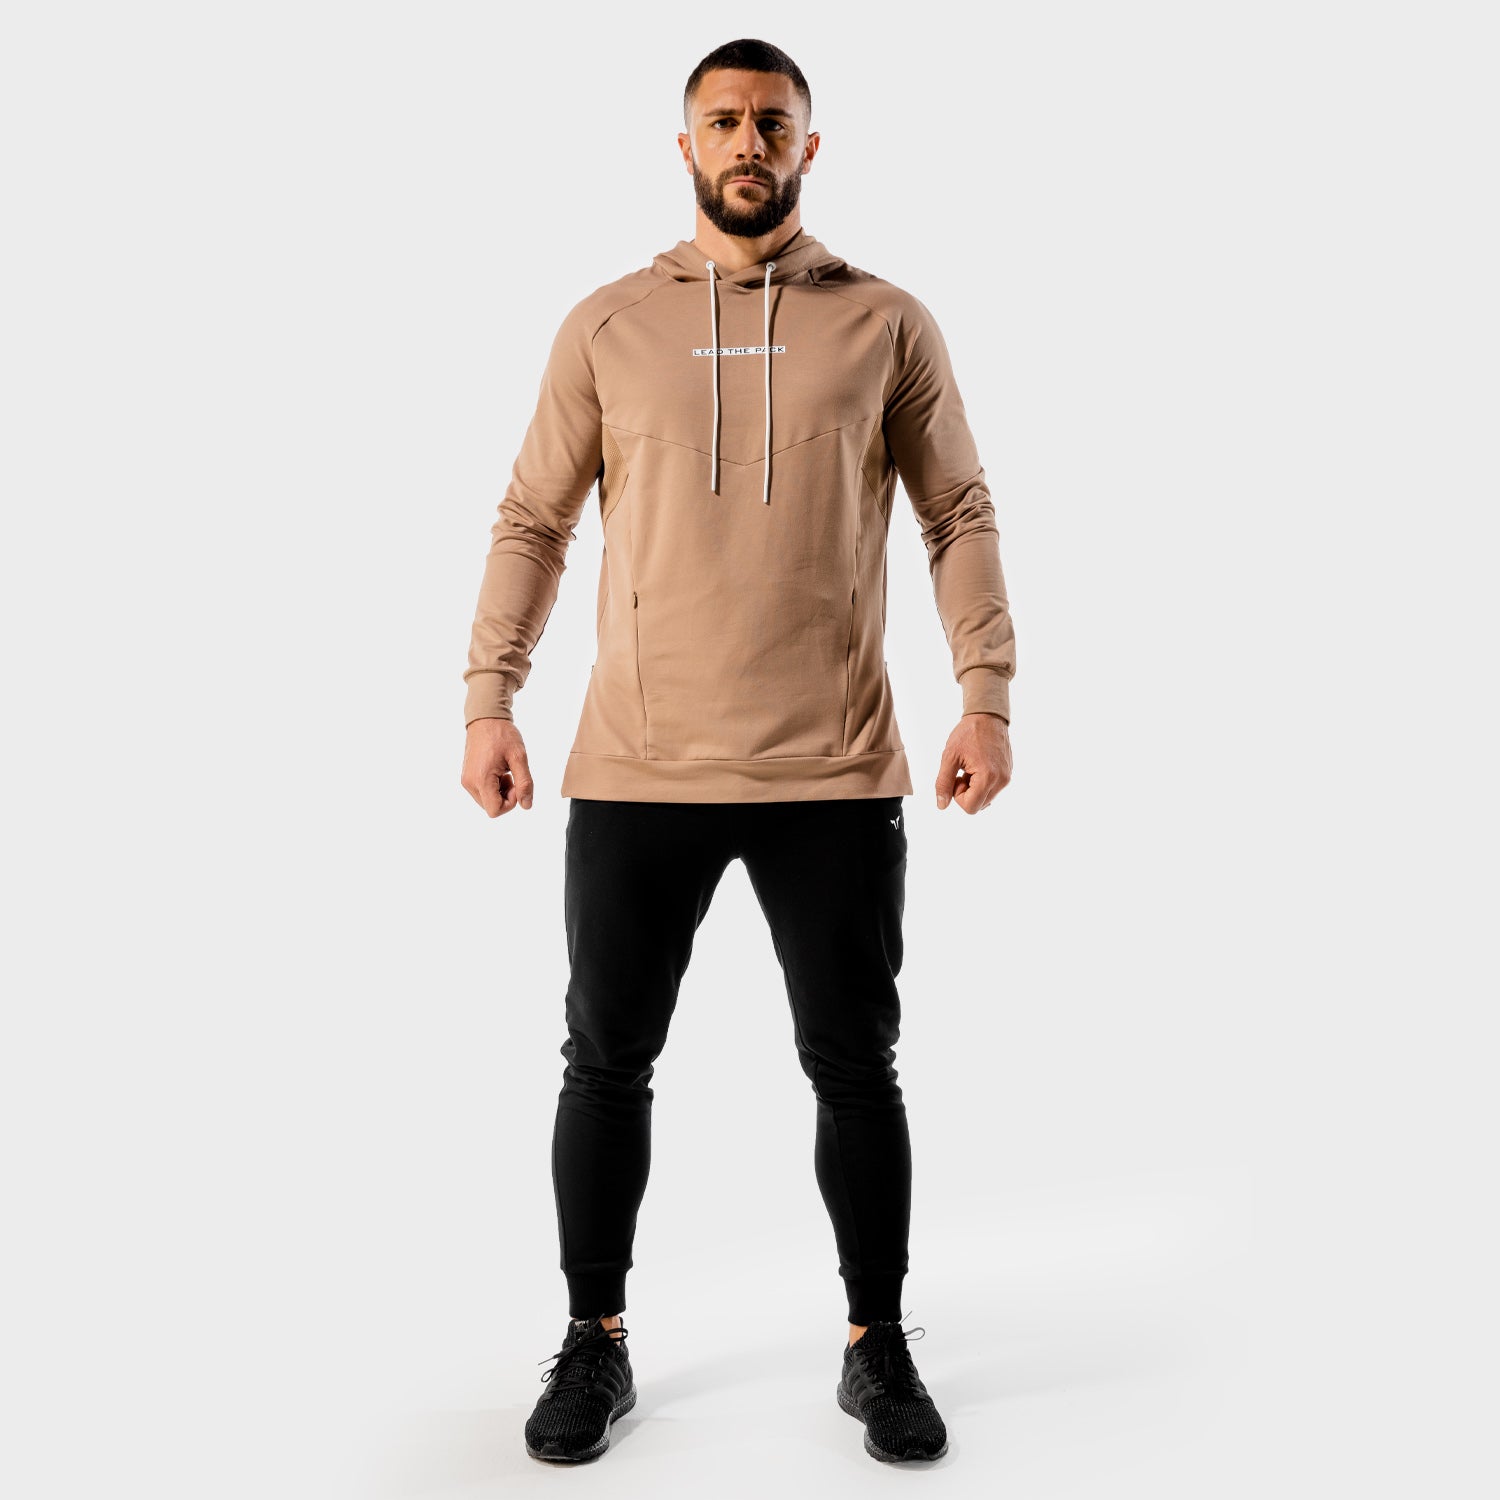 squatwolf-gym-wear-statement-hoodie-brown-workout-hoodies-for-men